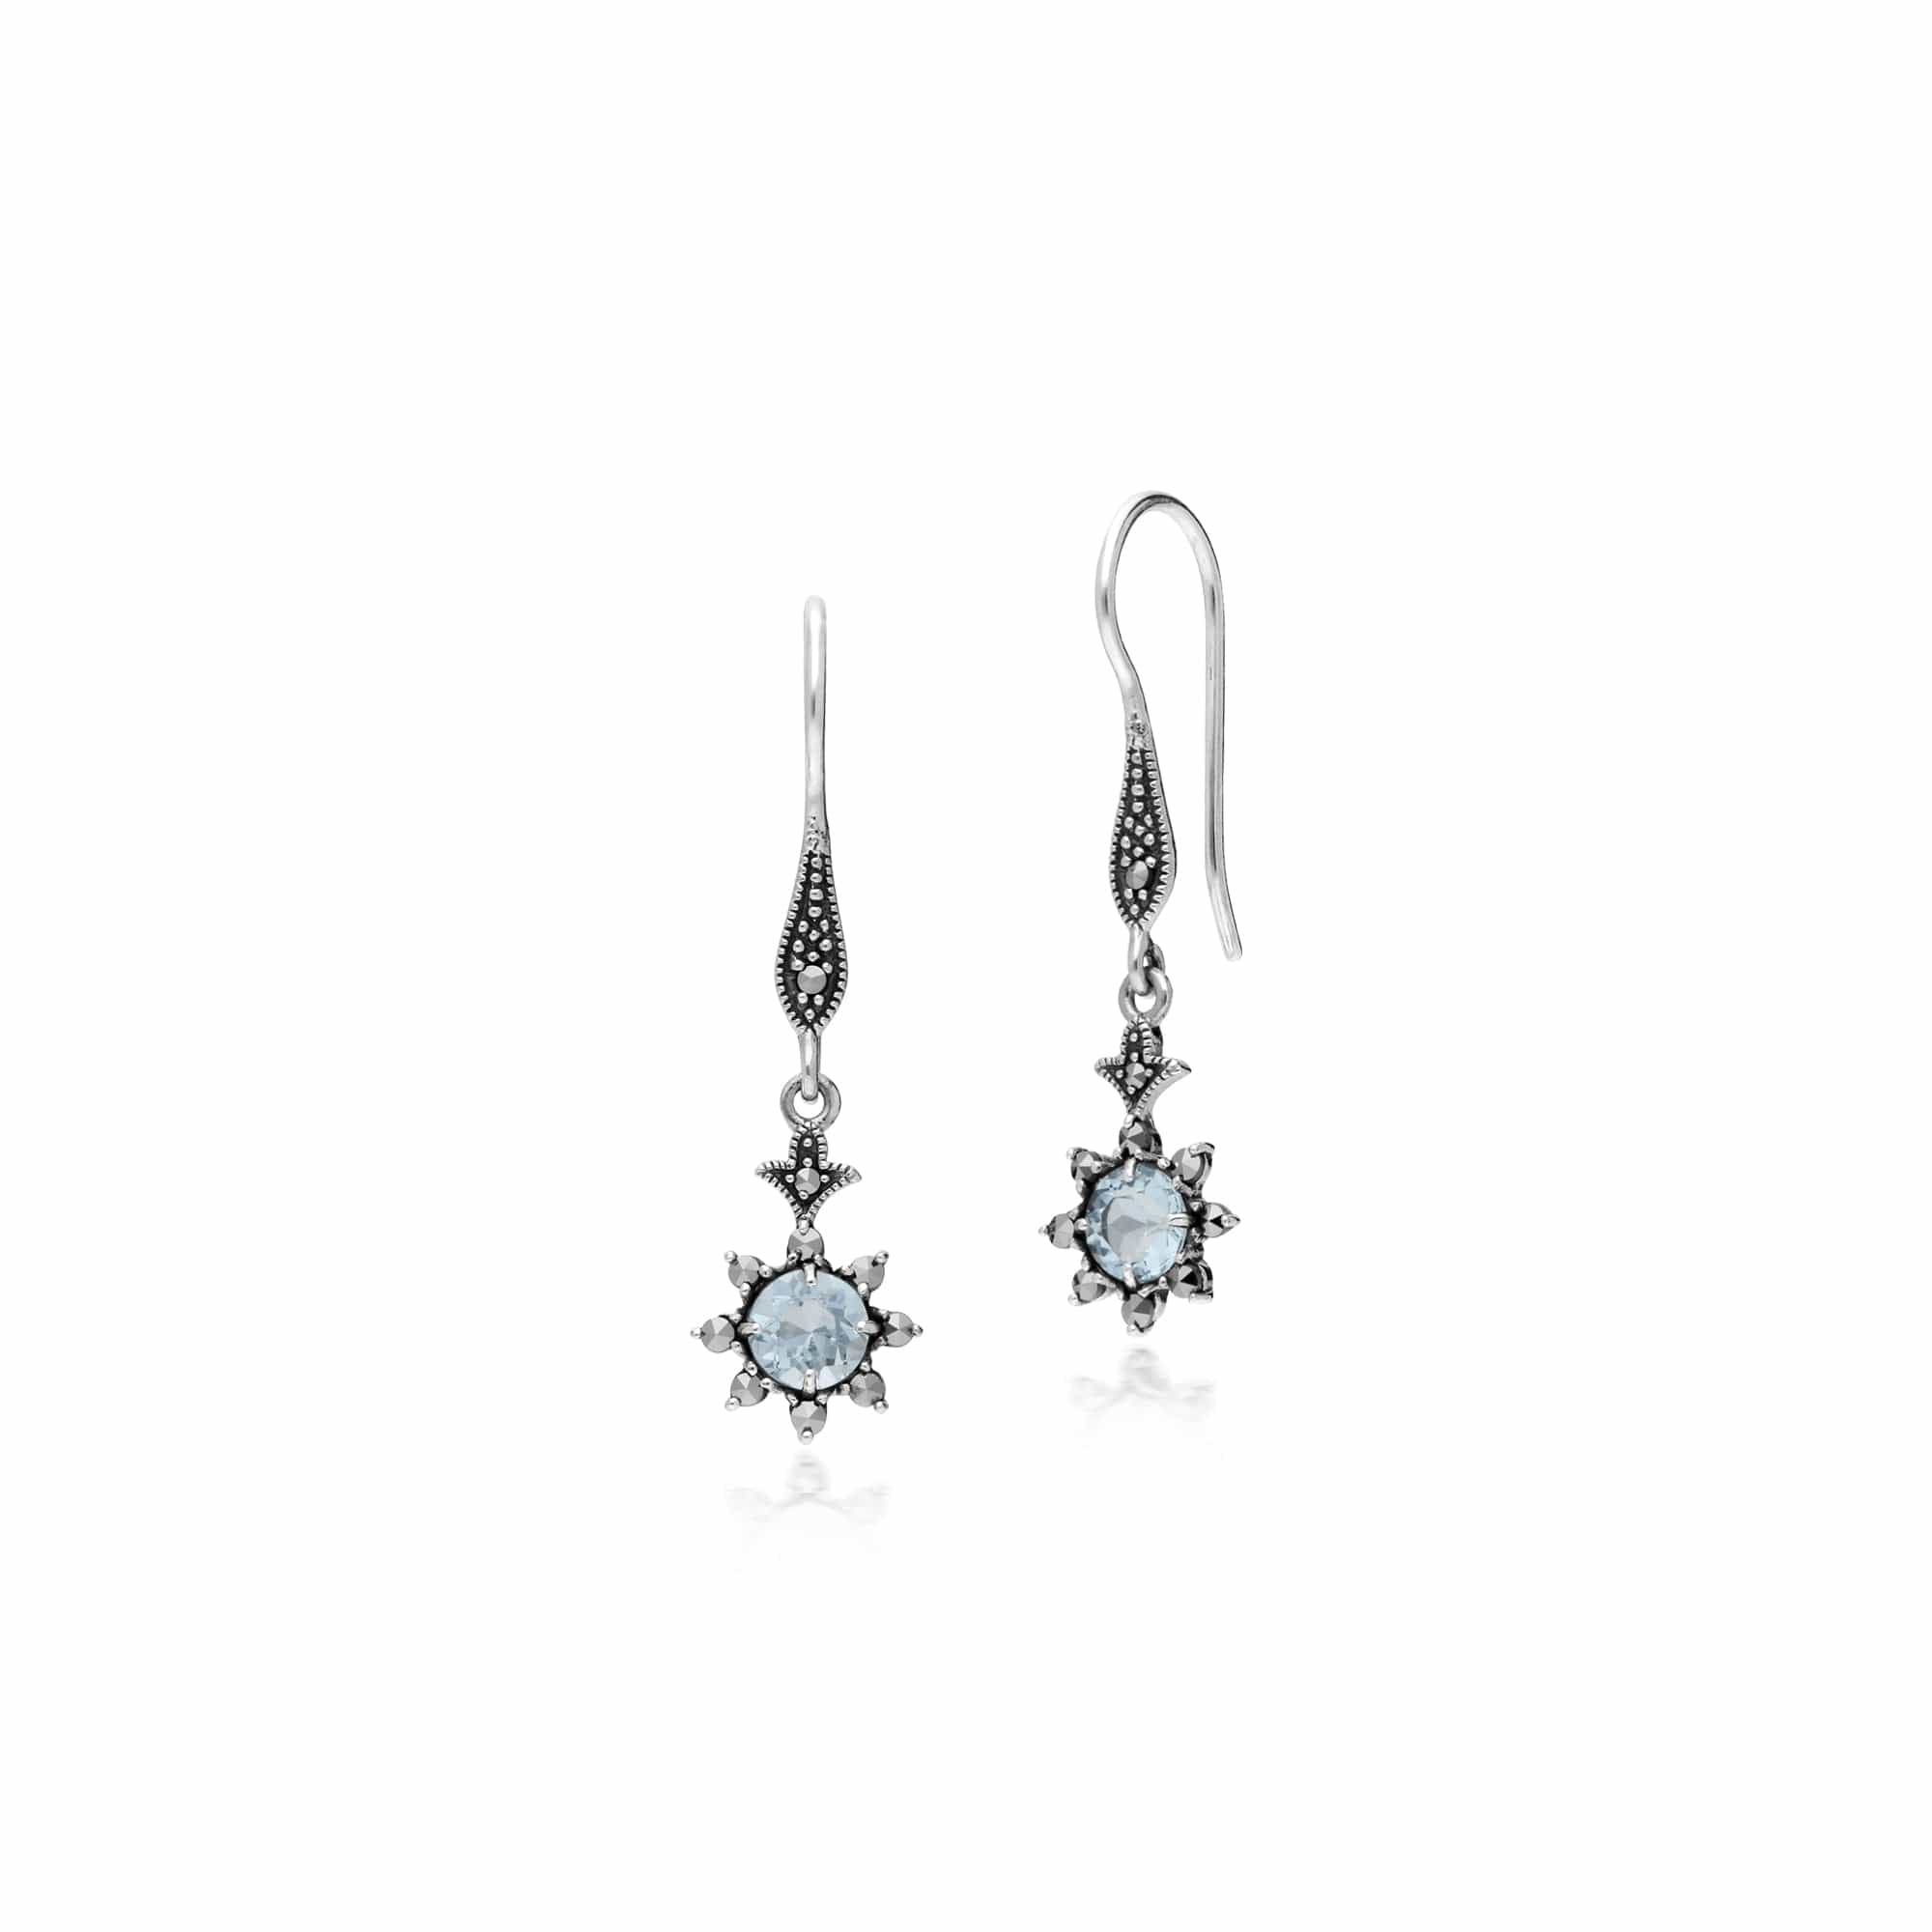 Floral Round Blue Topaz & Marcasite Drop Earrings in 925 Sterling Silver - Gemondo